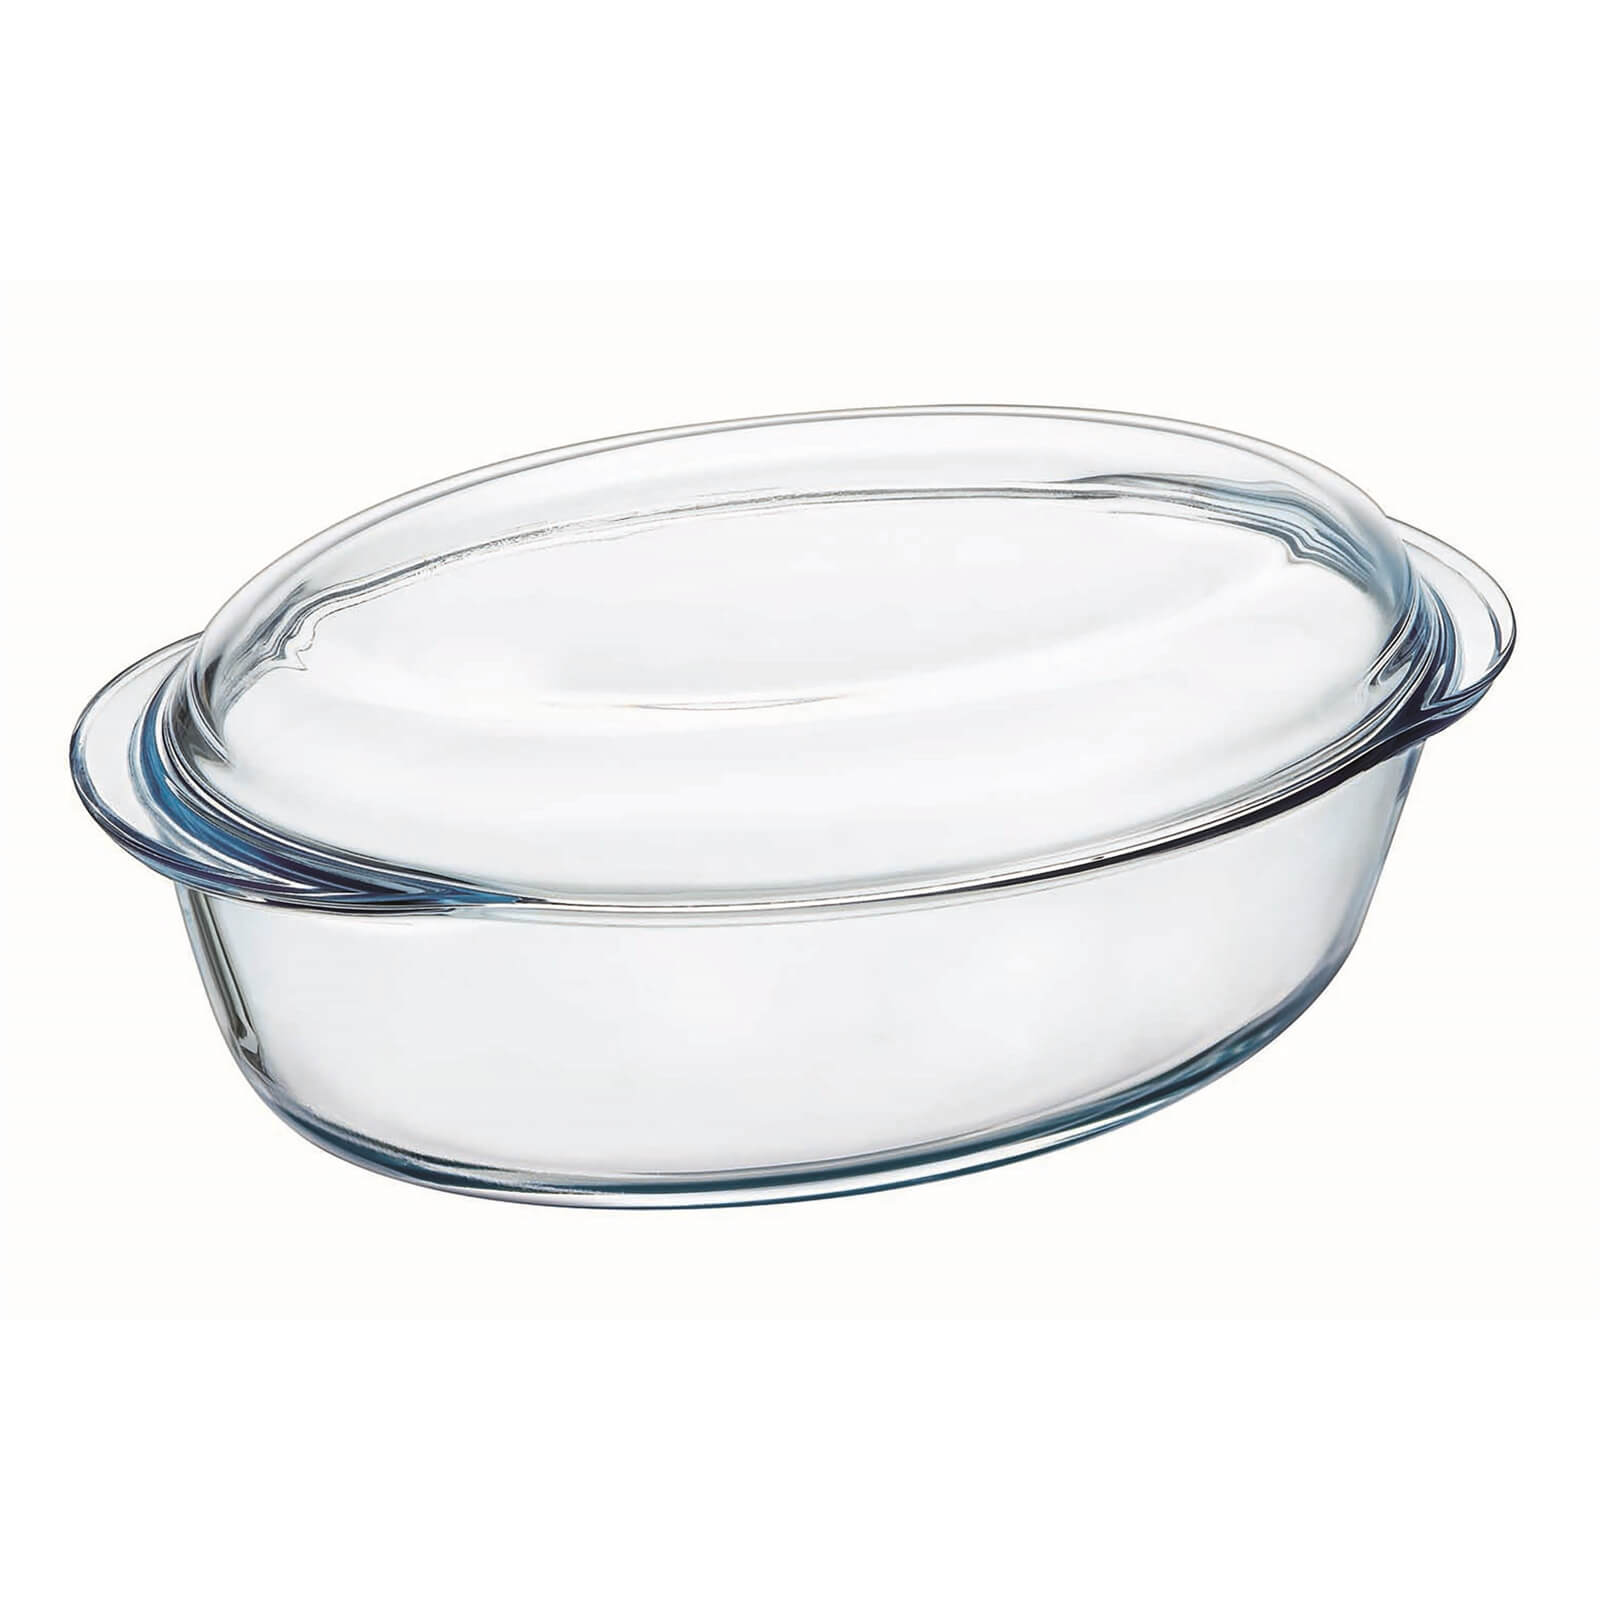 Photo of Pyrex Essentials Oval Casserole Dish - 3l & 1l